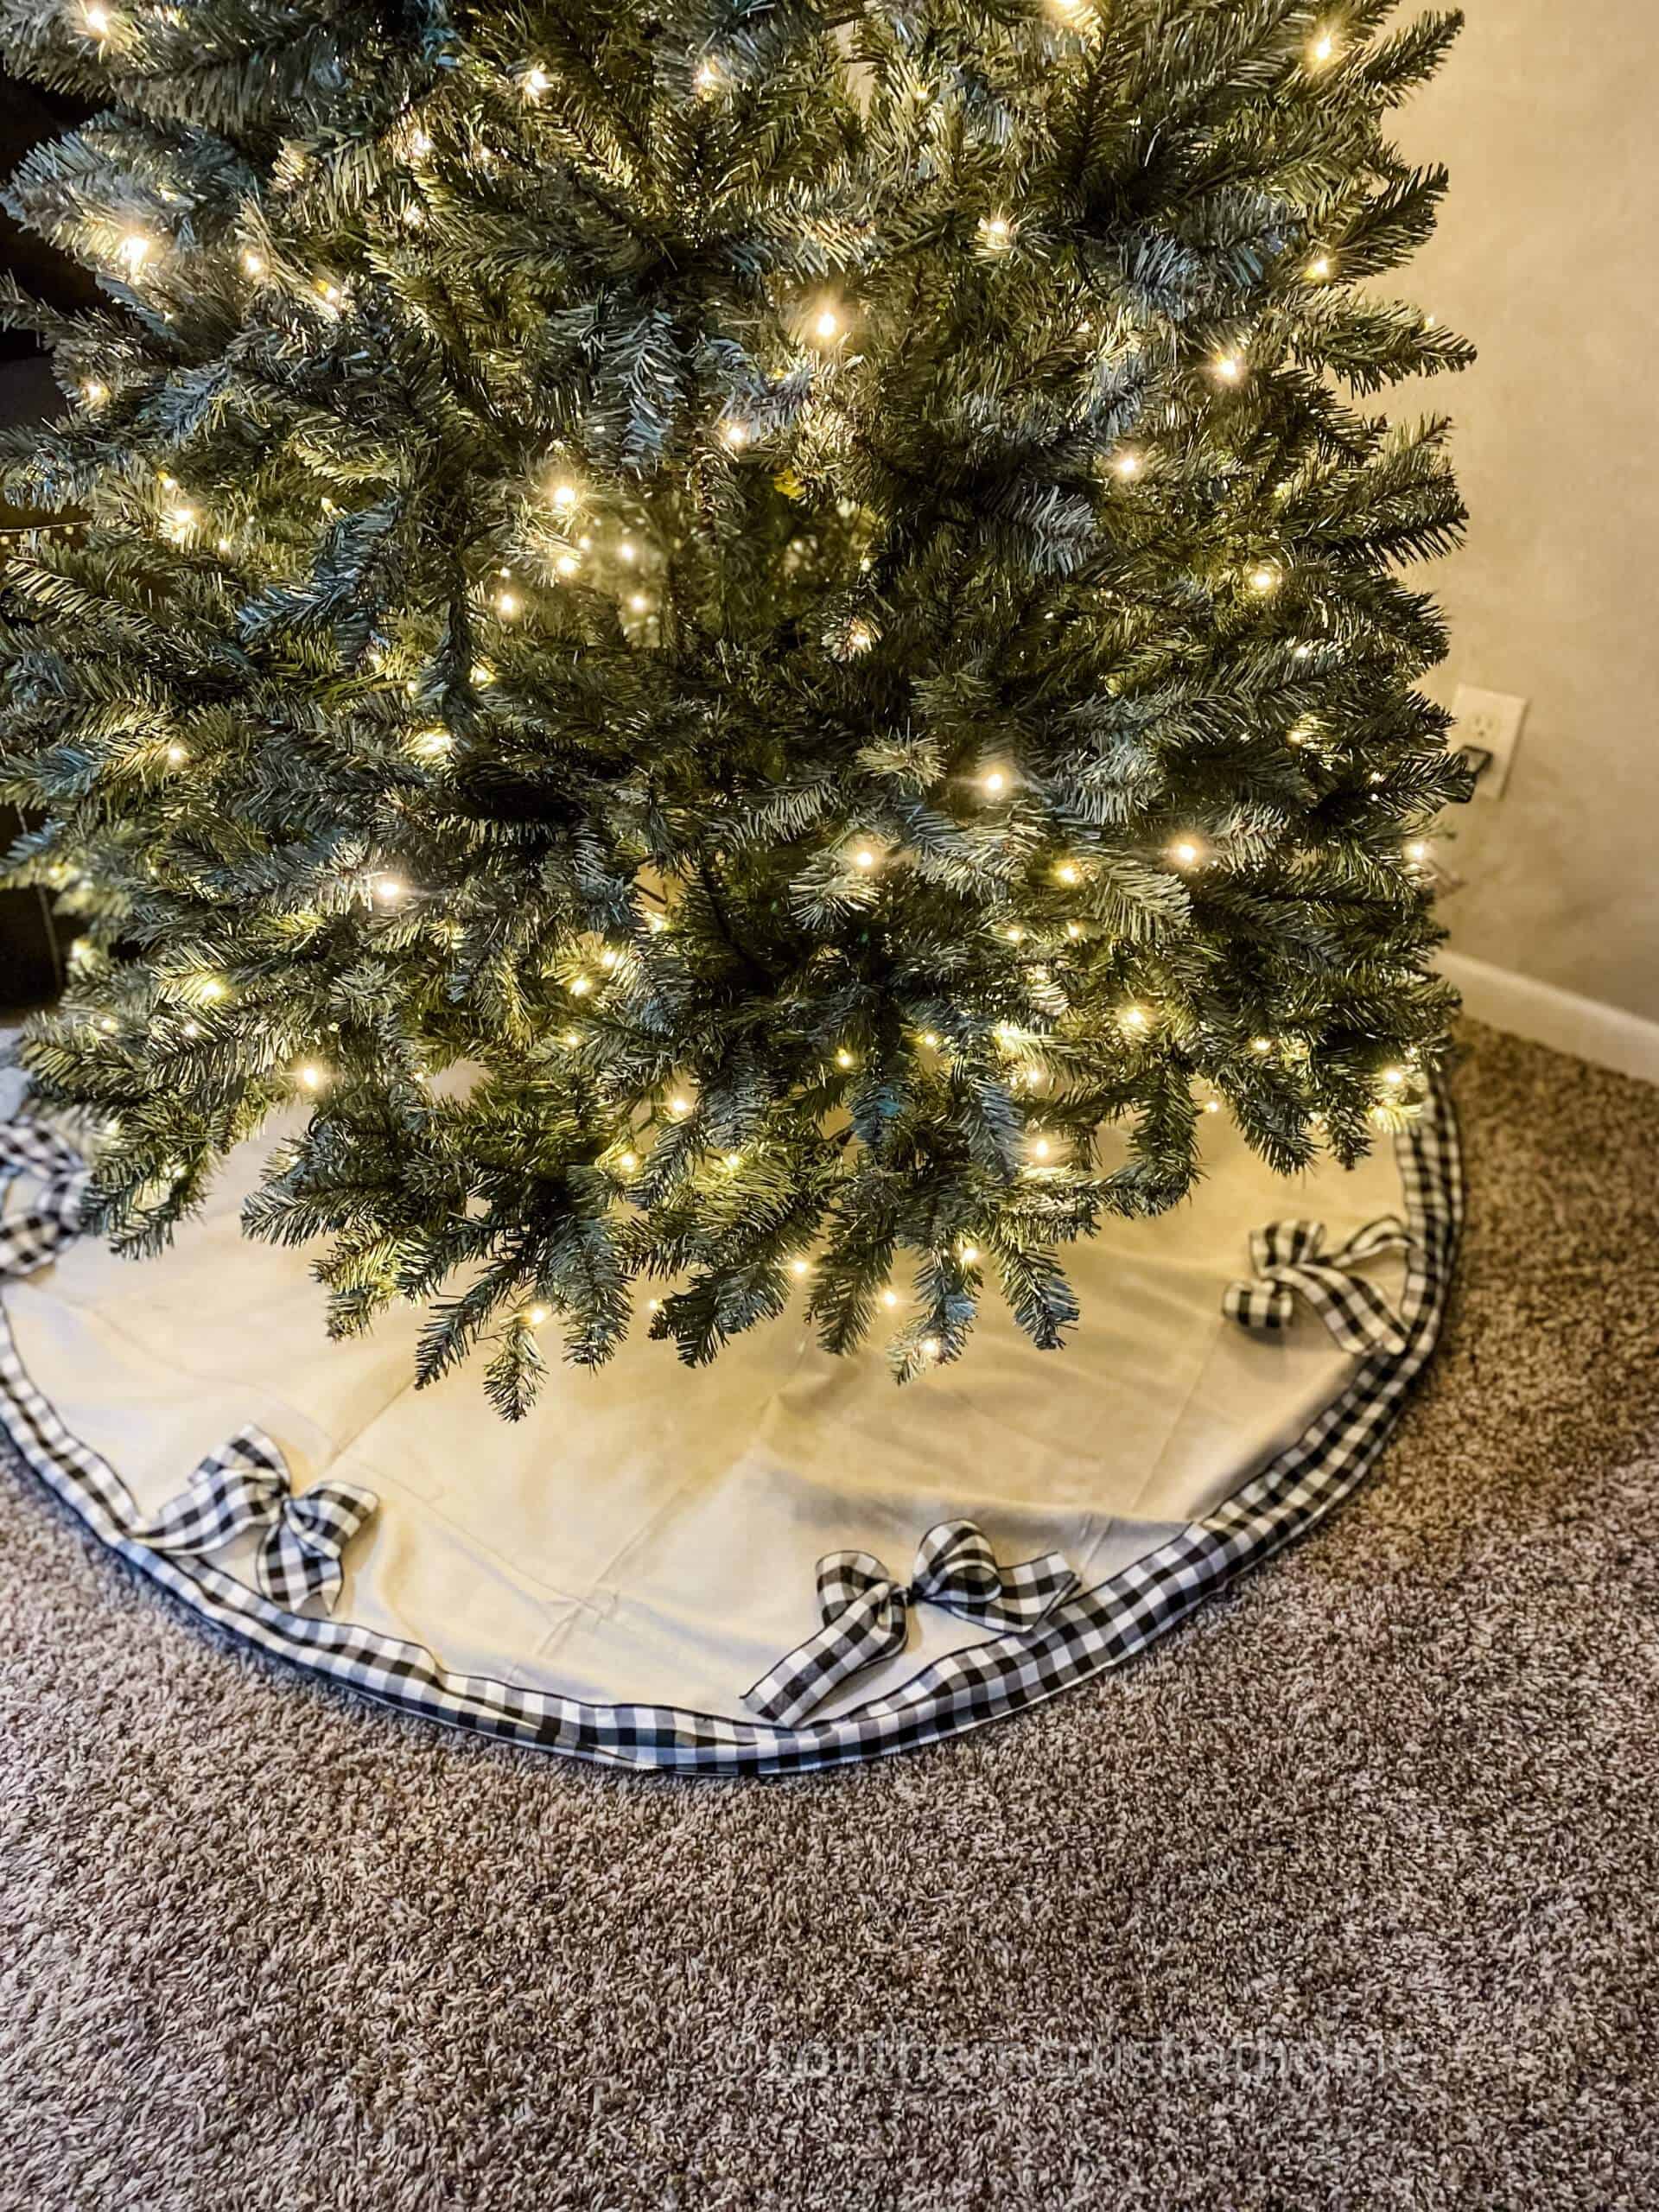 drop cloth tree skirt underneath christmas tree